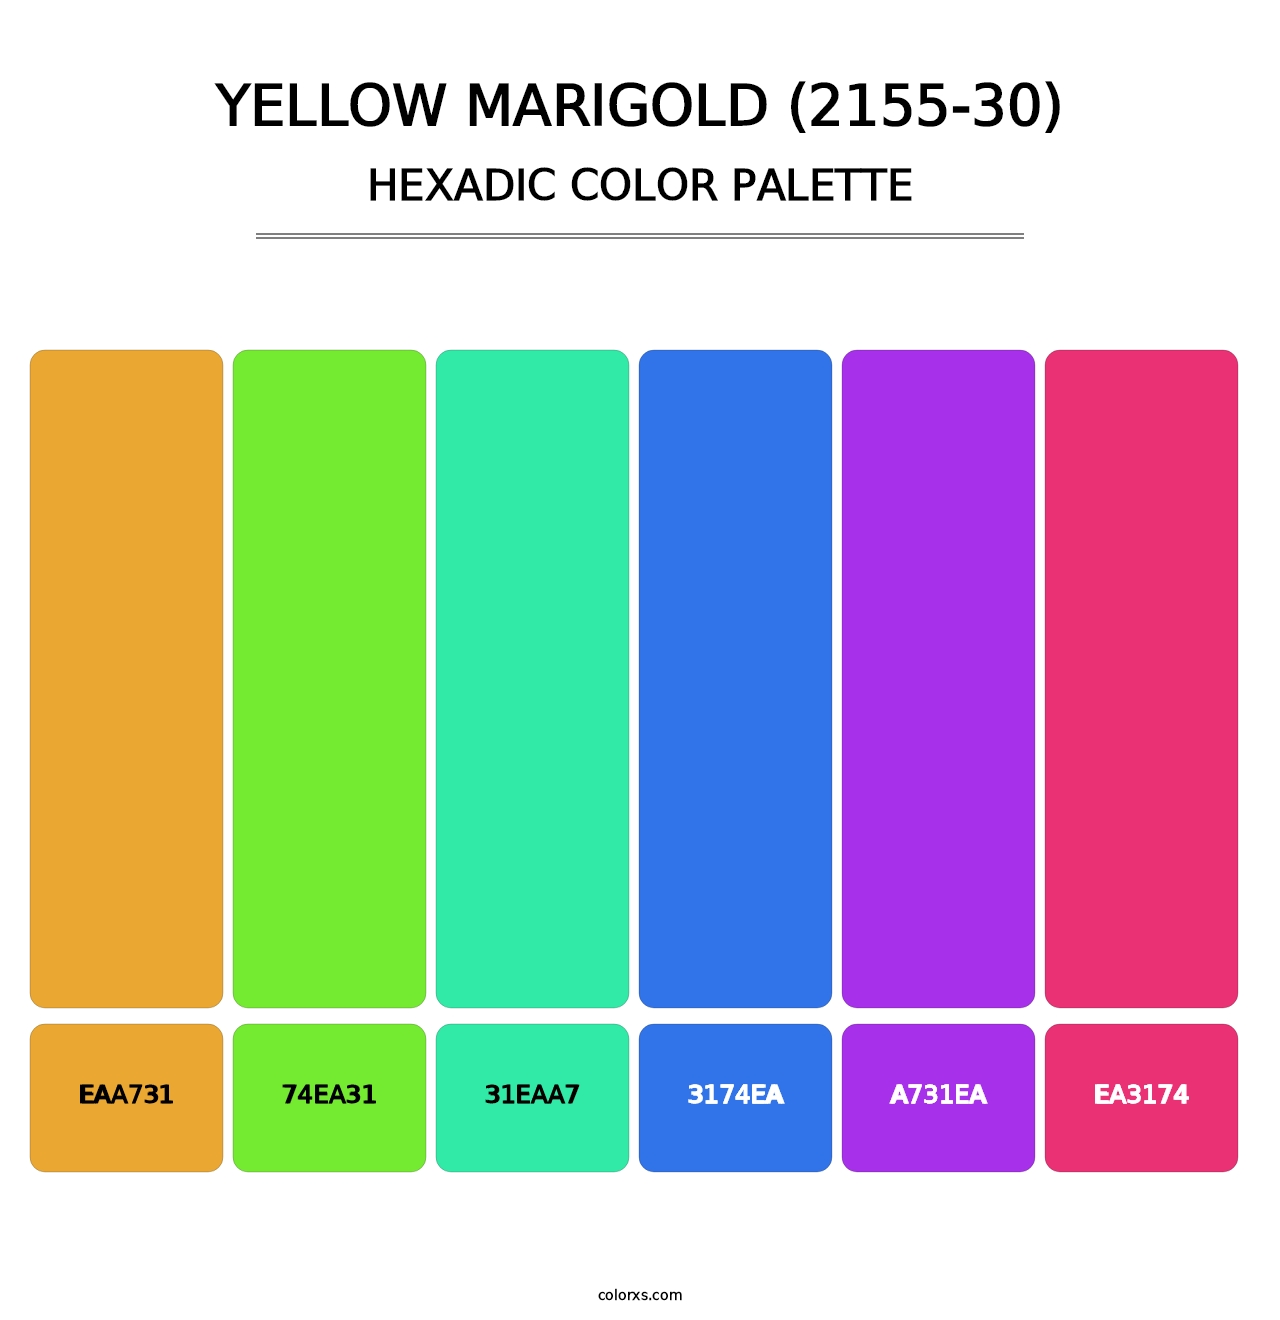 Yellow Marigold (2155-30) - Hexadic Color Palette